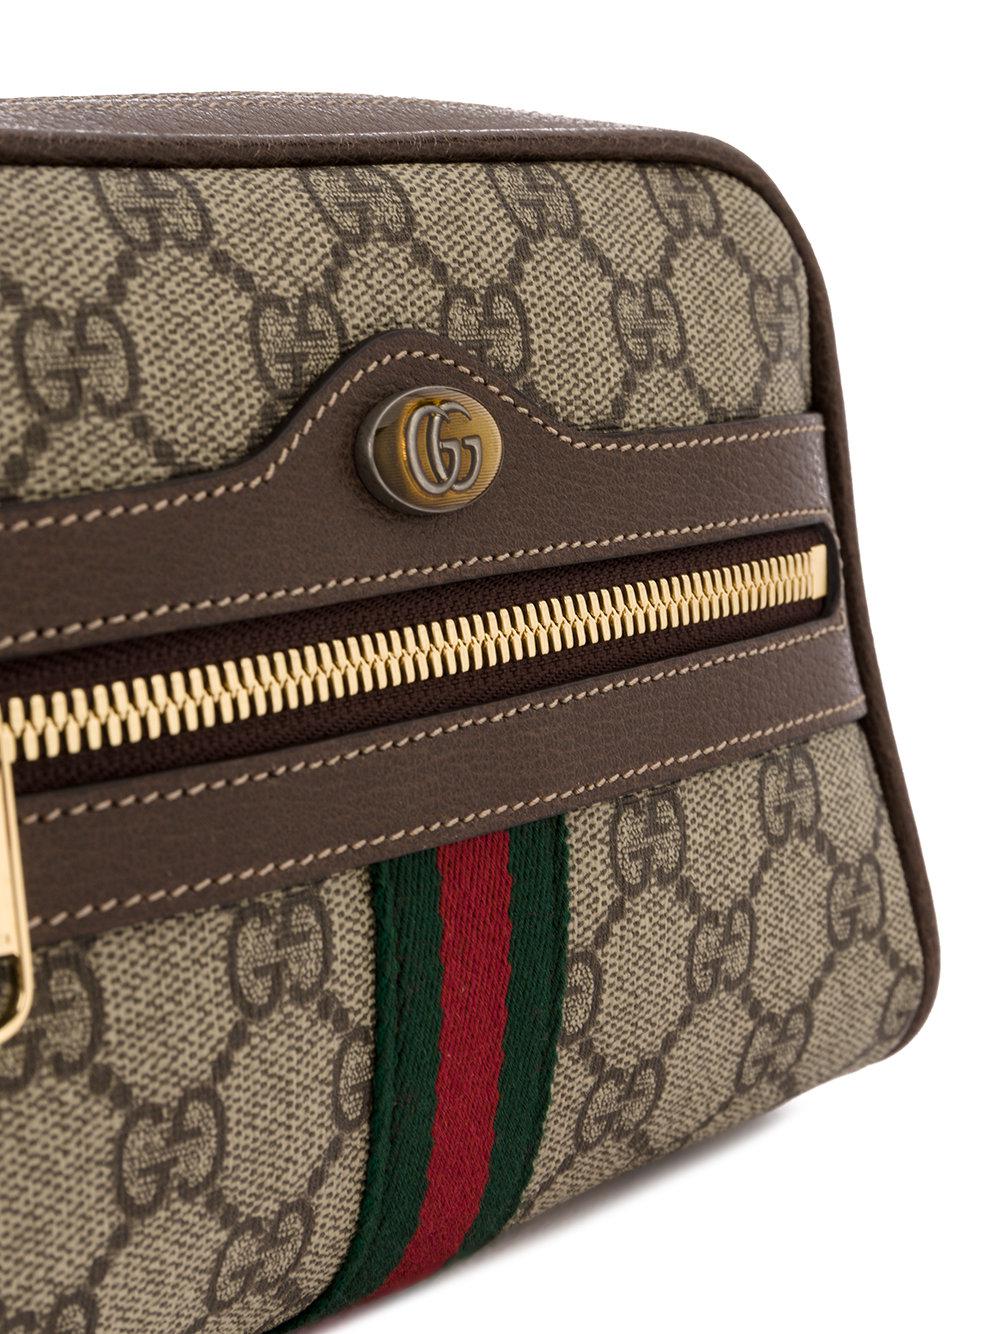 Gucci Canvas Gg Supreme Belt Bag in Brown - Lyst